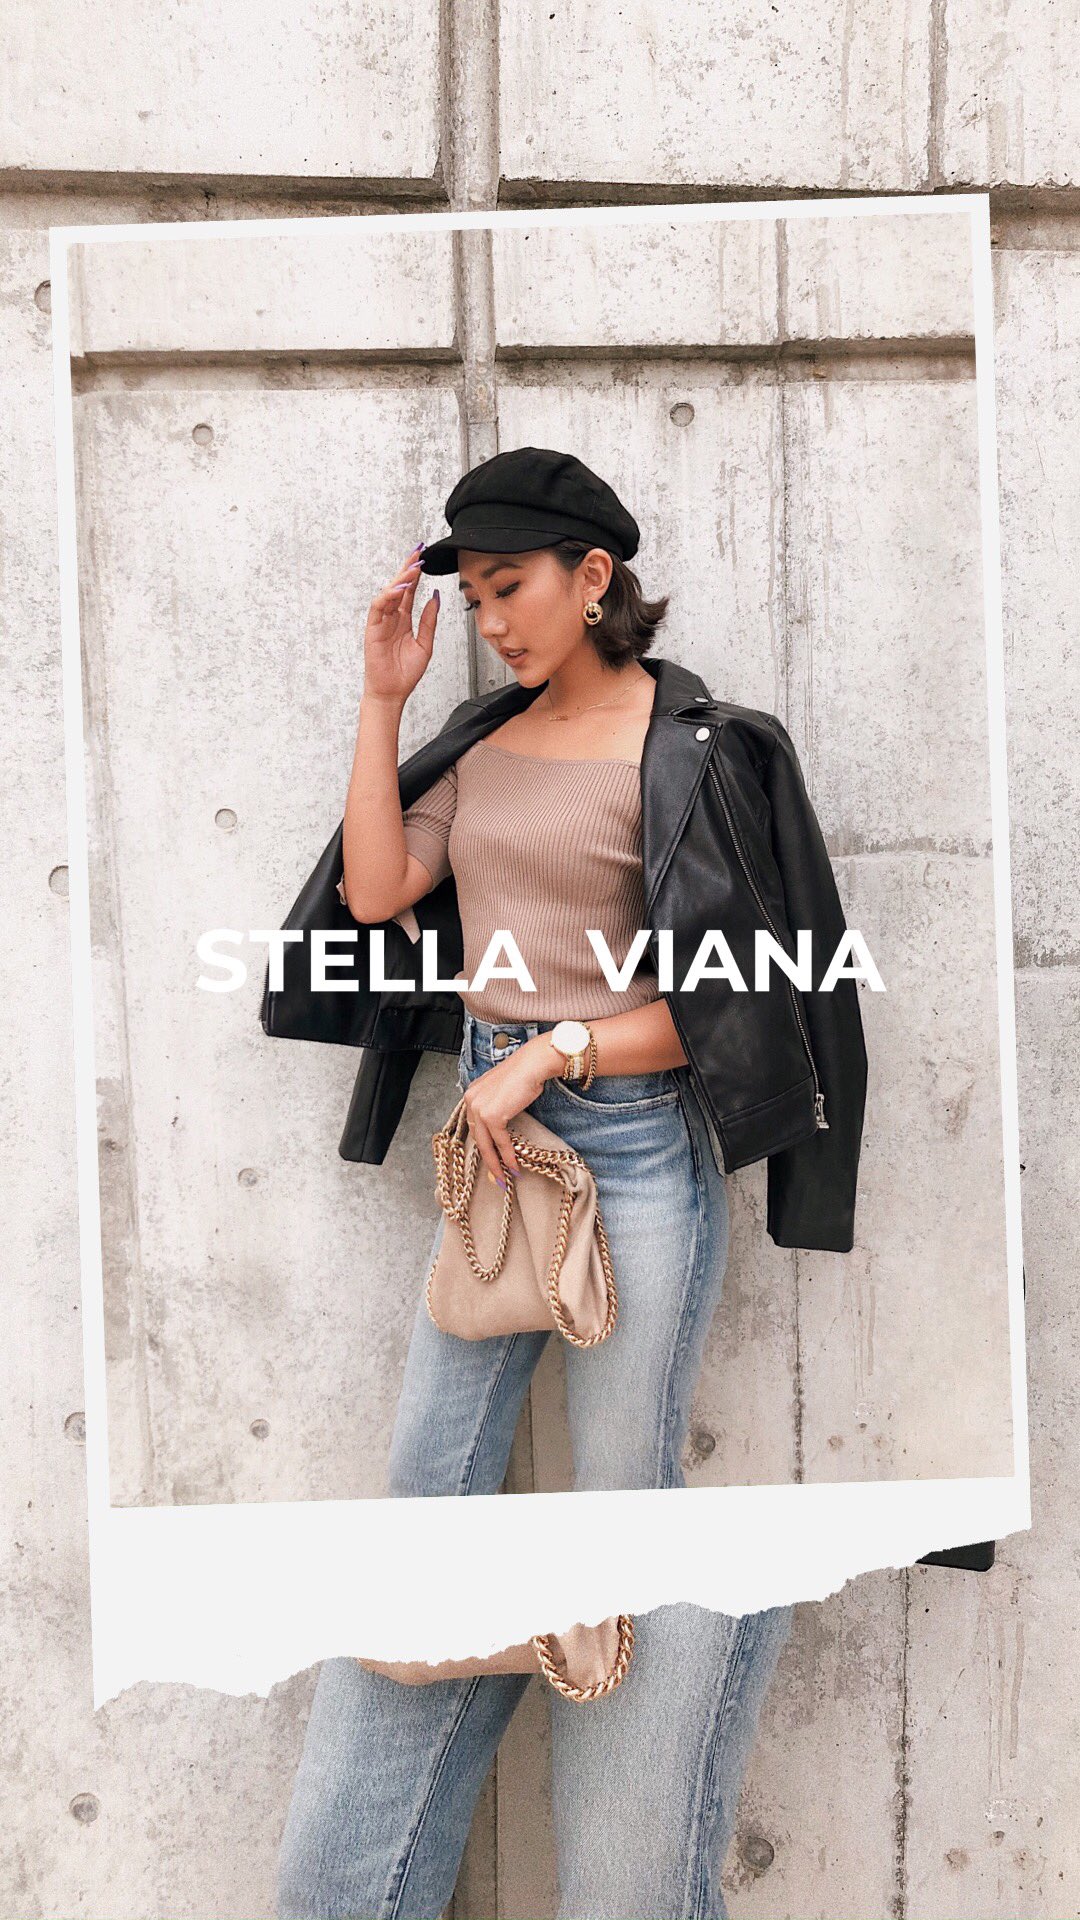 Stellaviana_official (@Stellaviana_) / Twitter